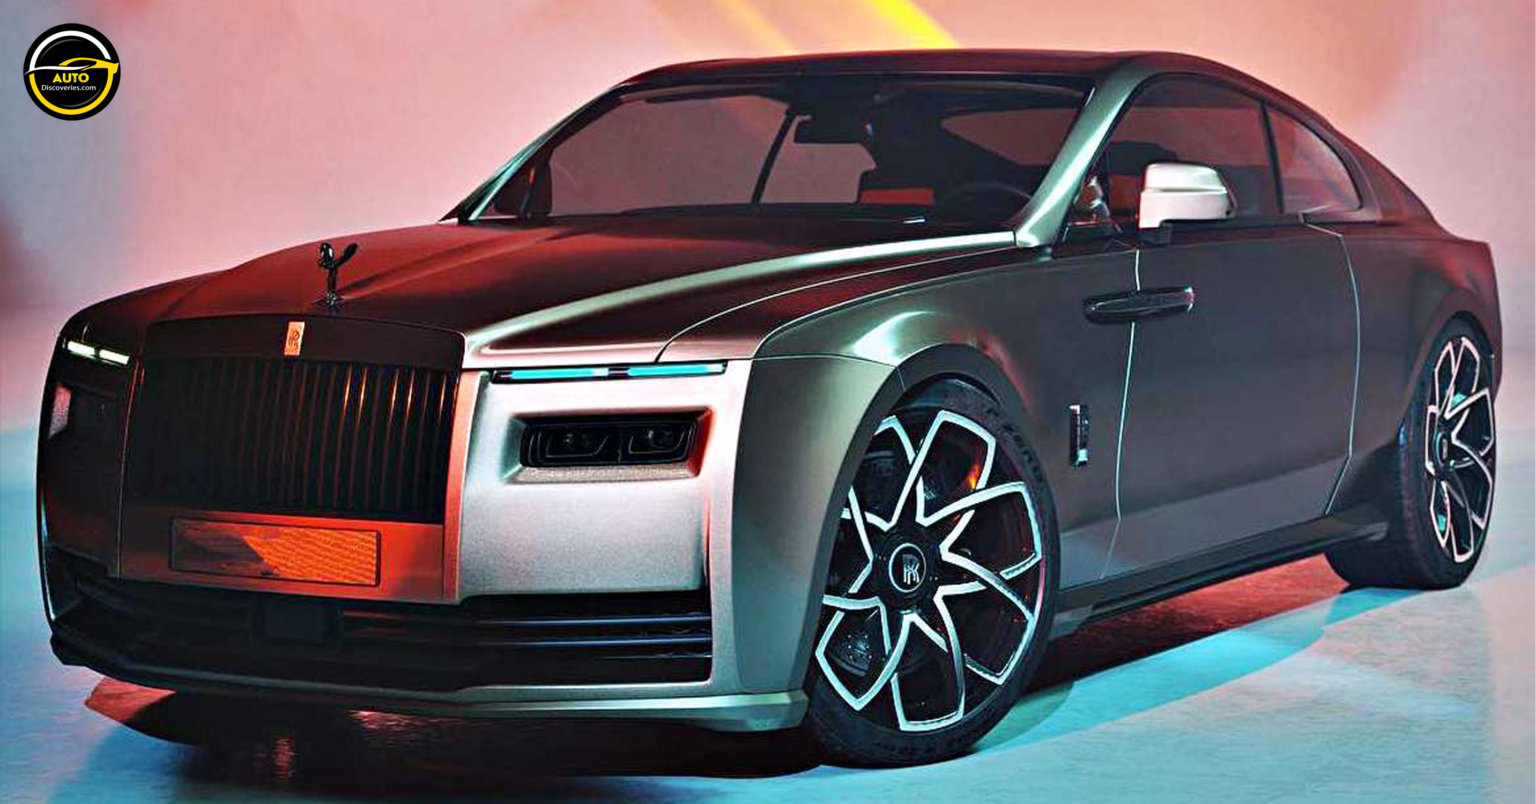 2024 Rolls Royce Wraith Facelift Designed By Artem Shkirenko Auto